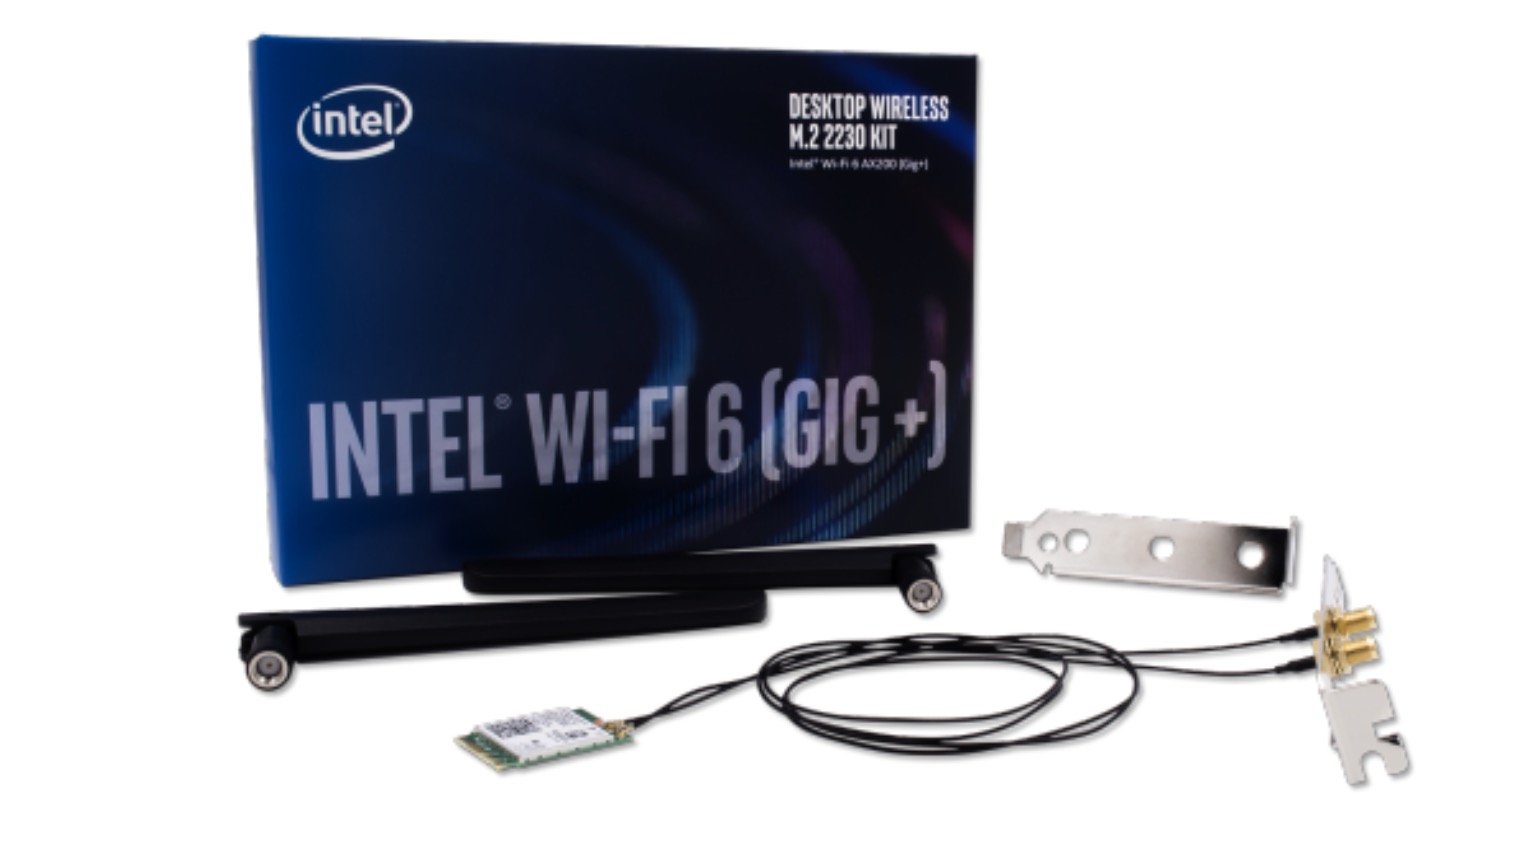 Intel wi fi 6 ax200. Intel ax210.NGWG. Intel Wi-Fi 6 ax200 (gig+) desktop Kit. Ax210.NGWG.NV.